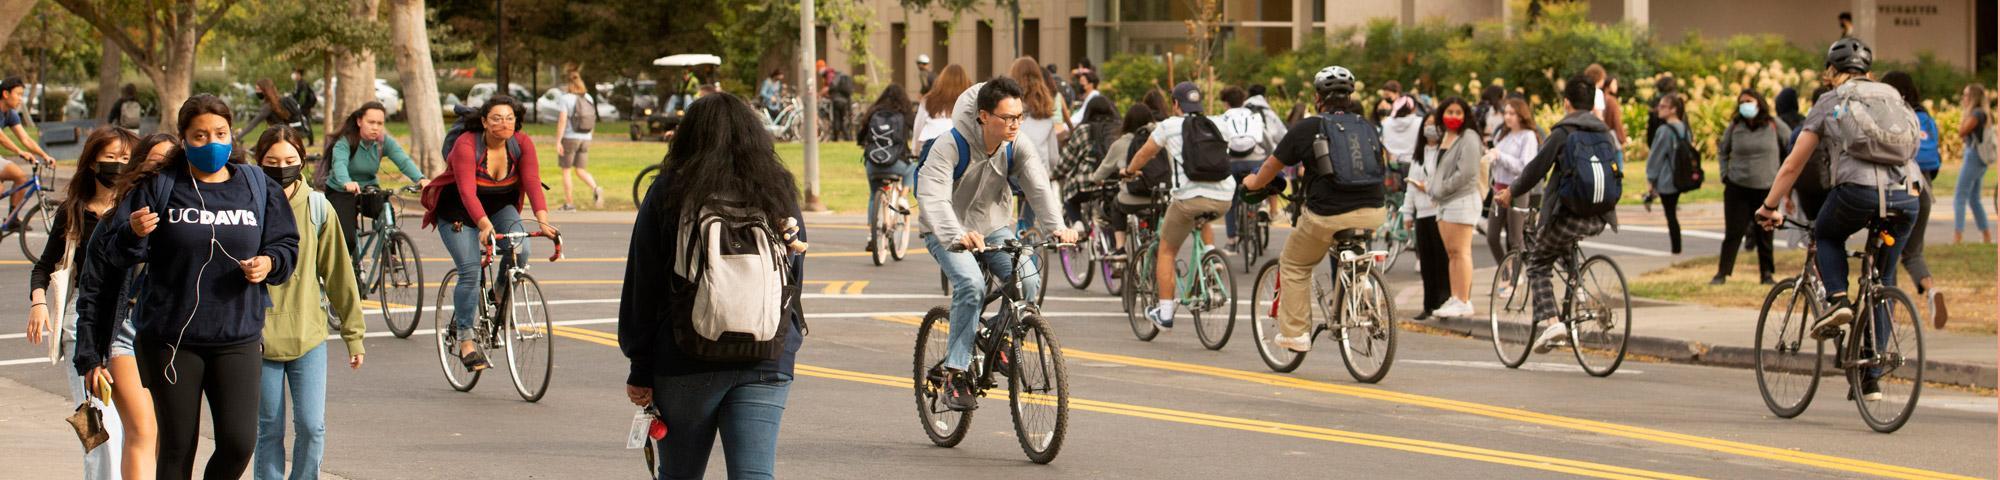 UC Davis students on bikes